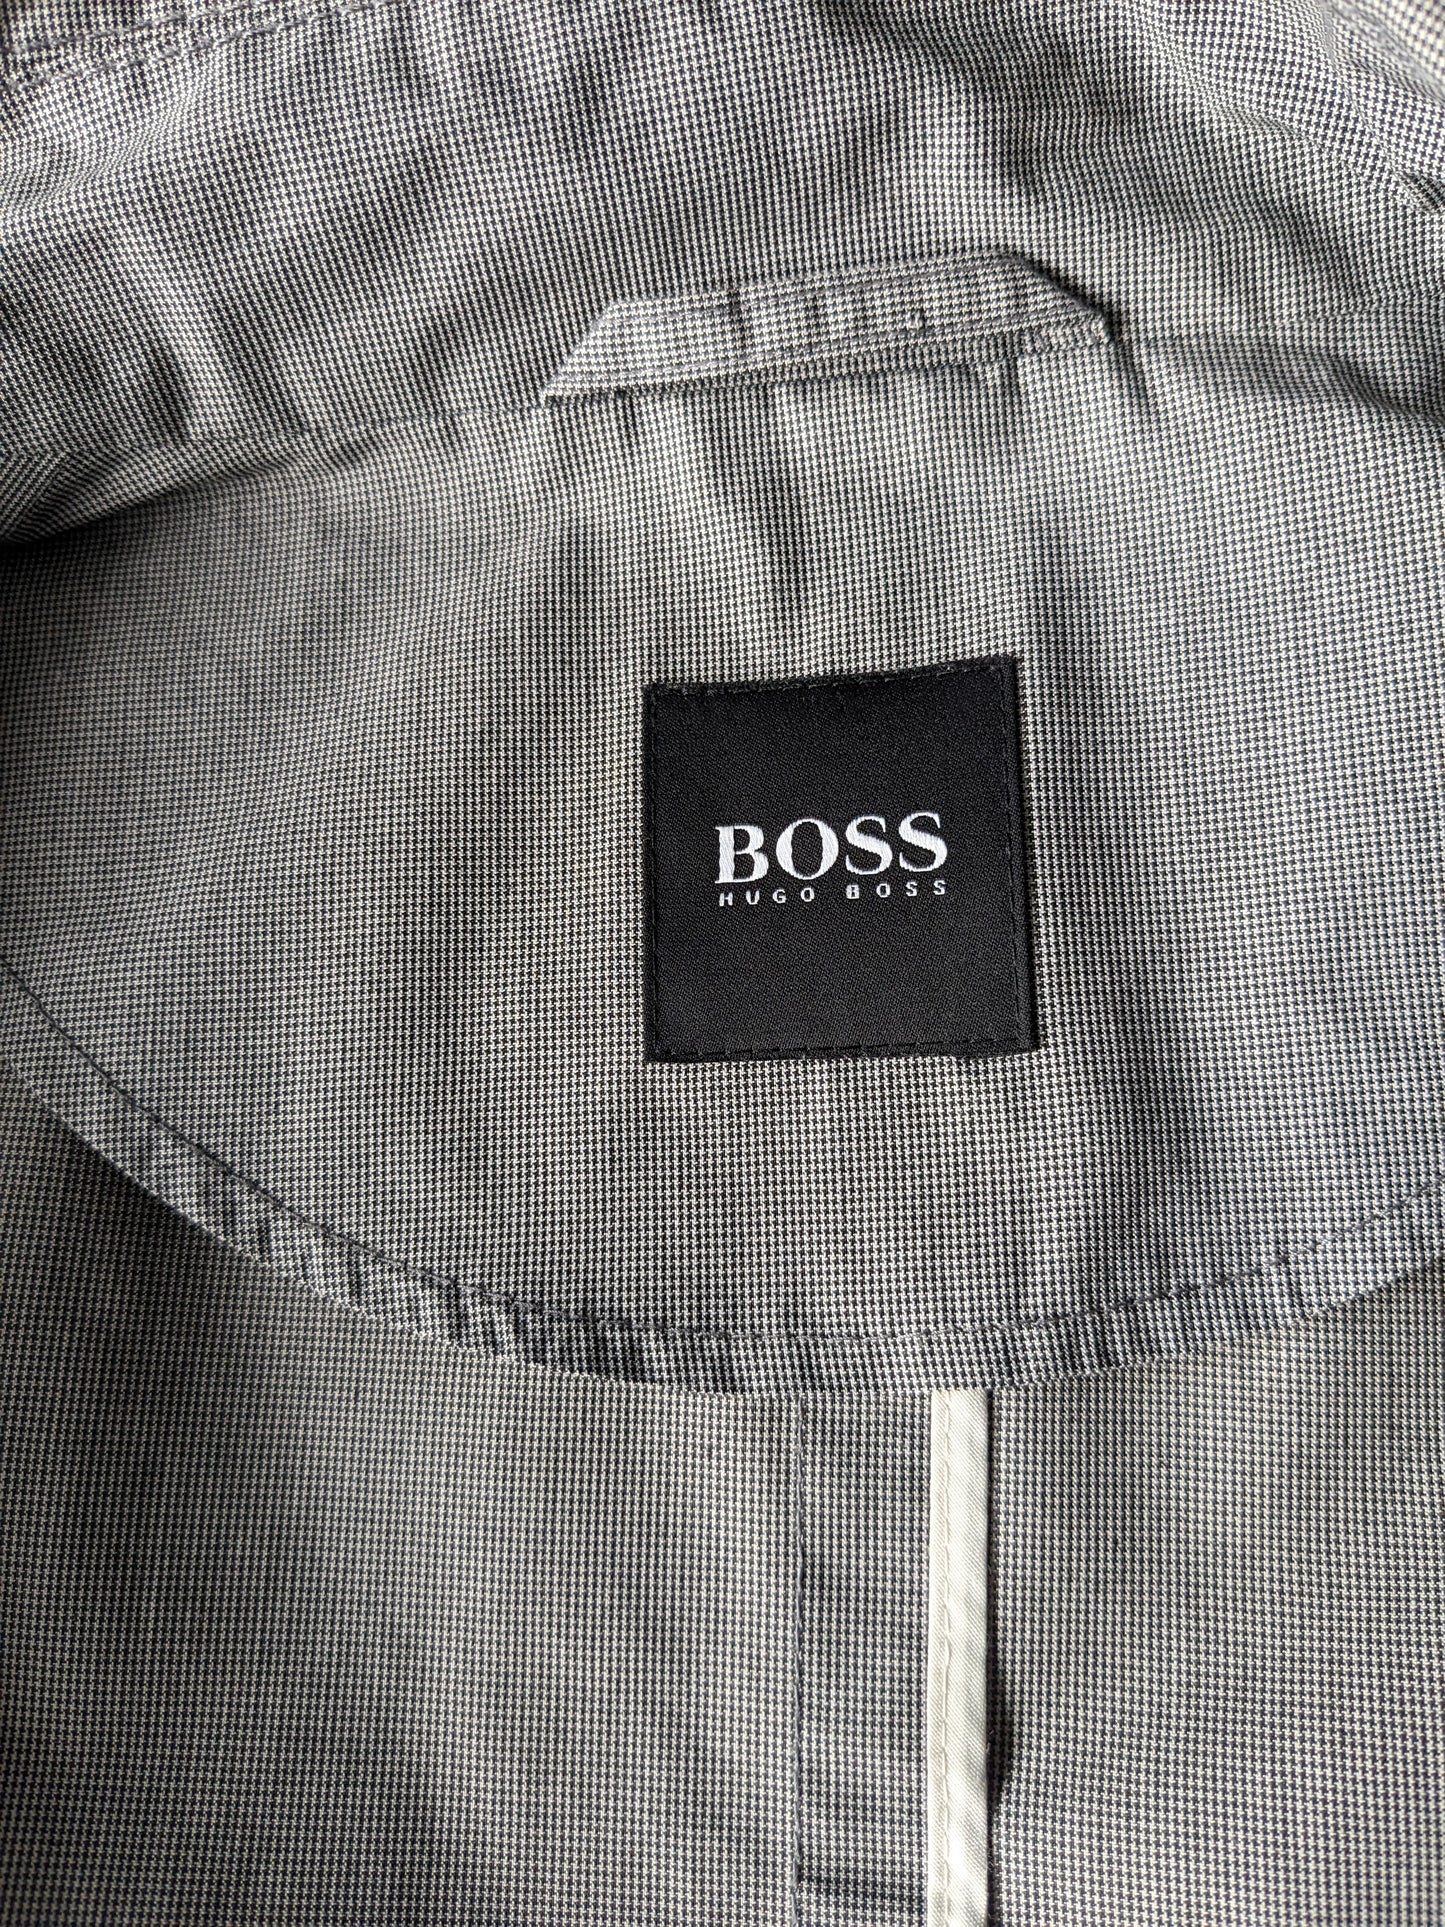 Boss Hugo bus between jacket / medium length. Black and white motif. Size 50 / M.